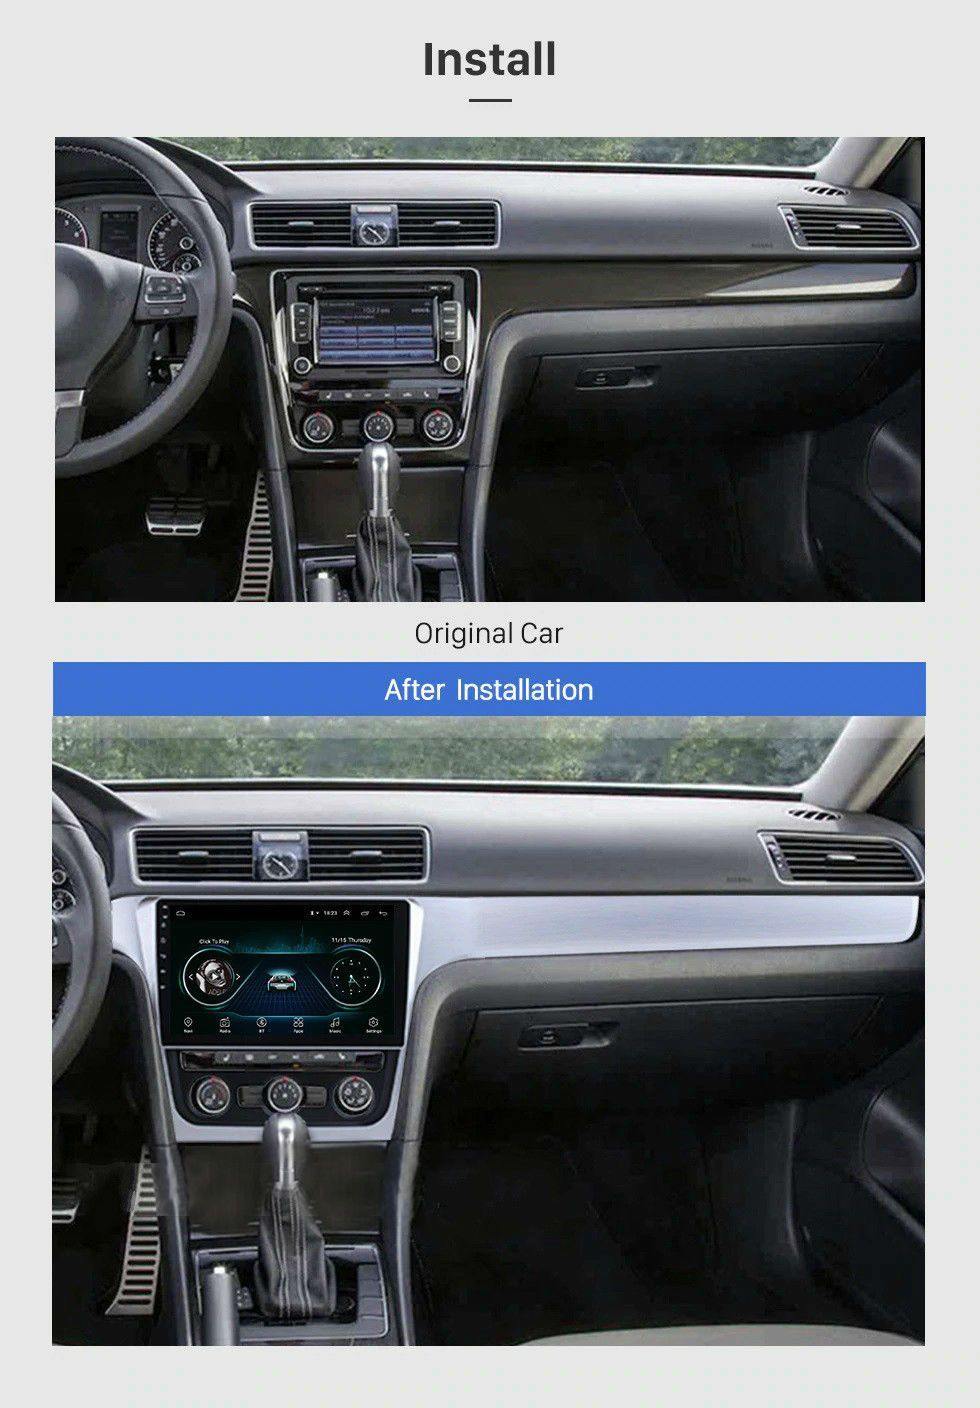 10.1 Octa-Core Android Navigation Radio for VW Volkswagen Passat 2012-2016 - Smart Car Stereo Radio Navigation | In-Dash audio/video players online - Phoenix Automotive